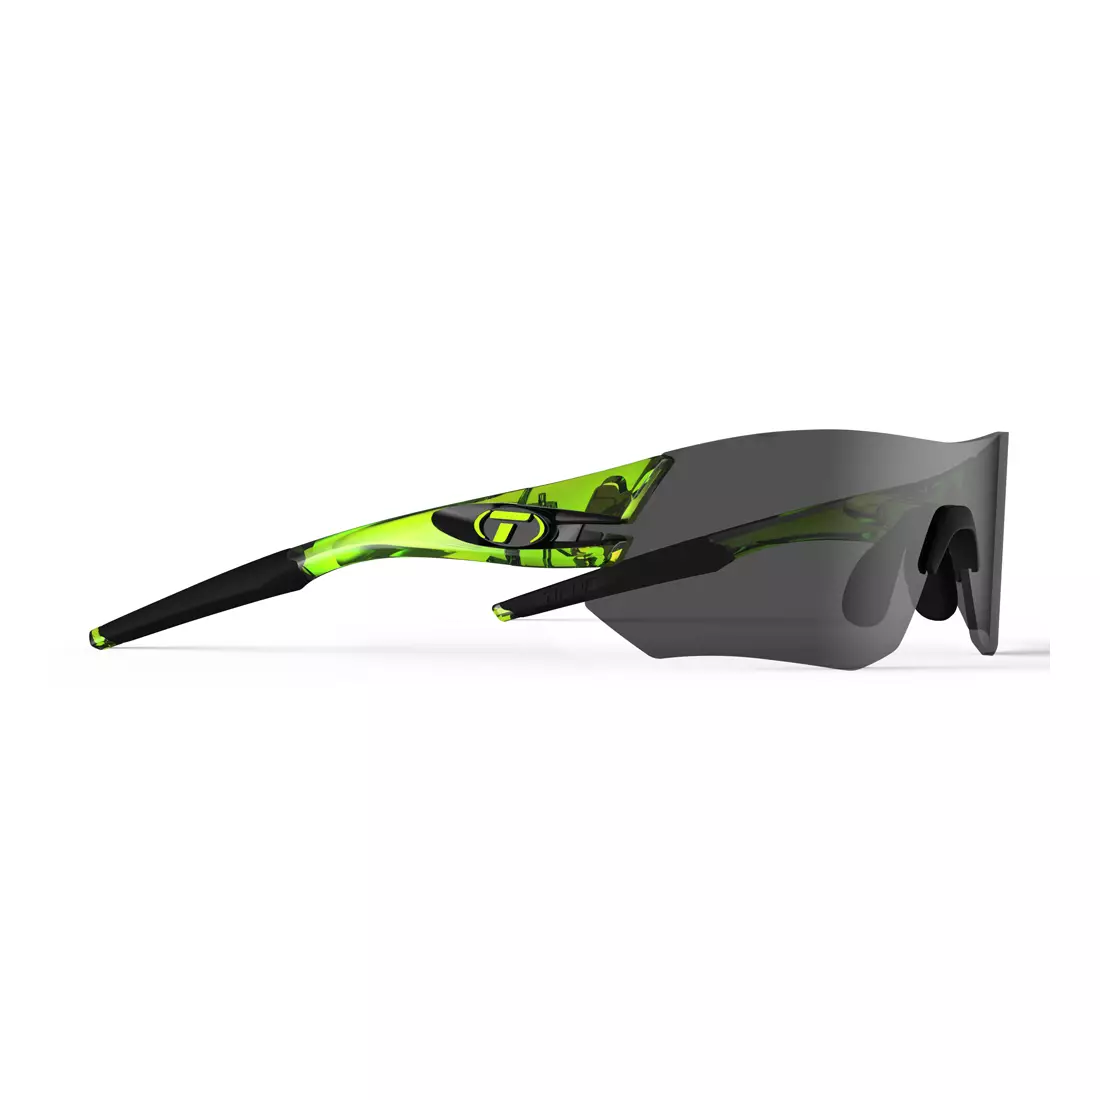 TIFOSI ochelari cu lentile interschimbabile y TSALI (Smoke, AC Red, Clear) crystal neon green TFI-1640105670